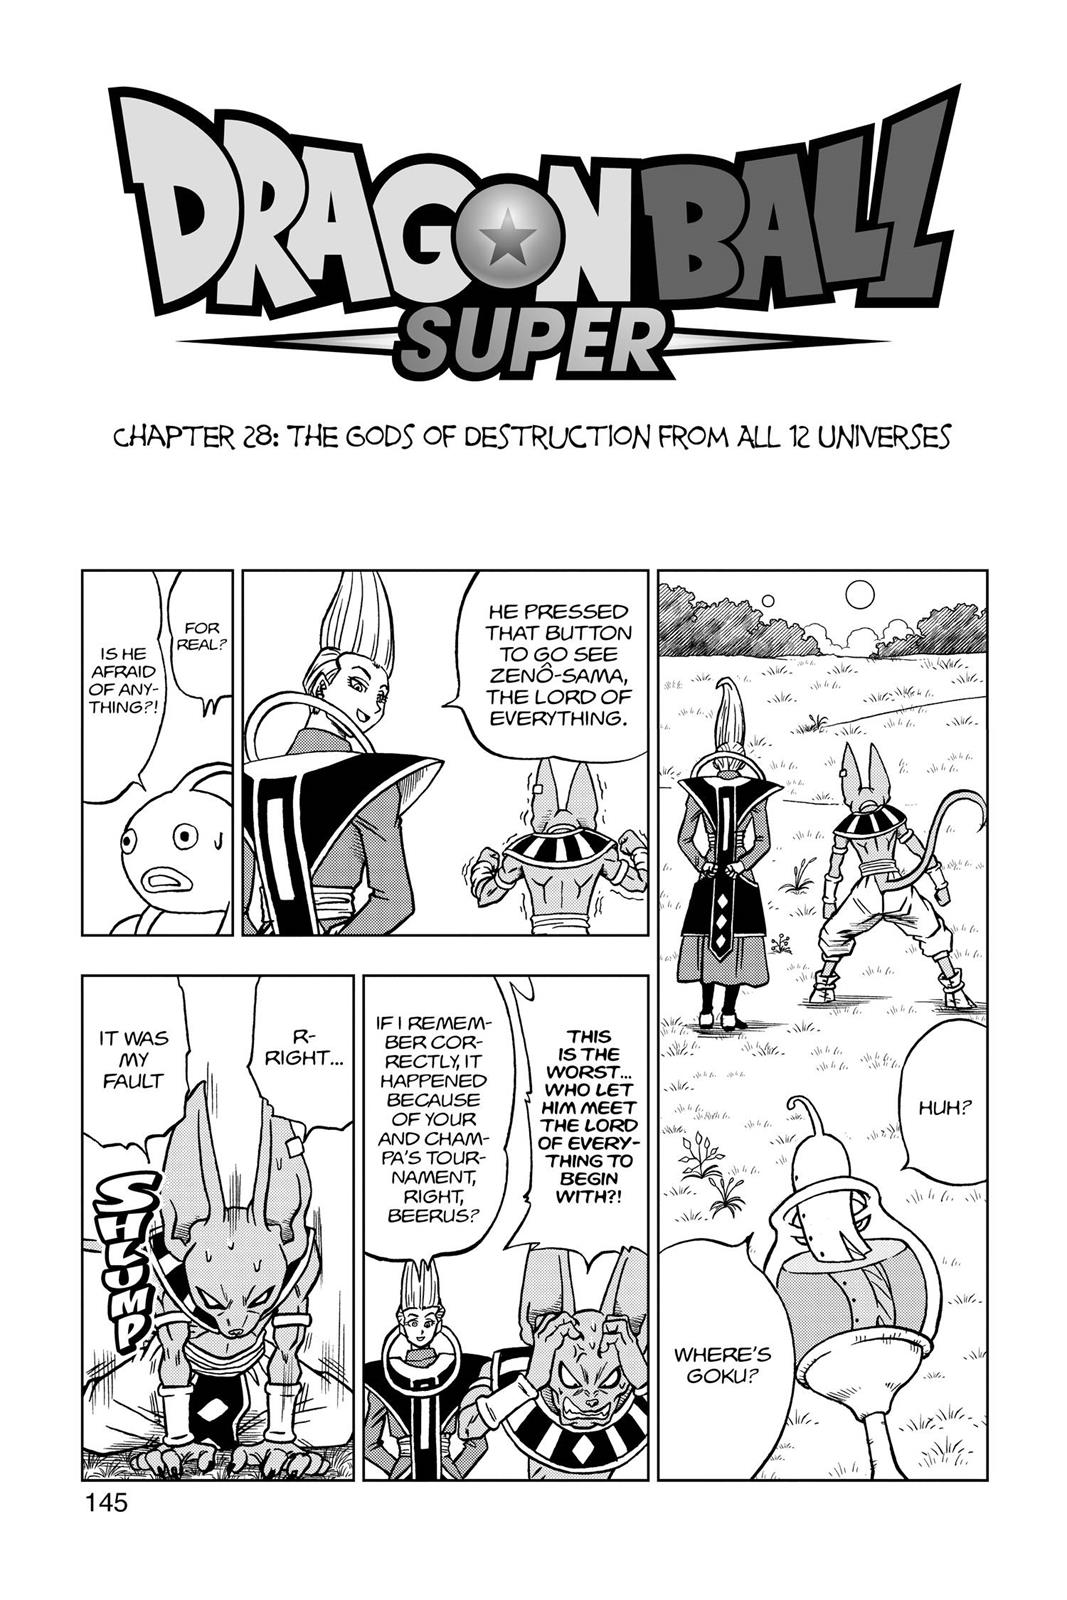 Dragon Ball Super 2: Goku vs GODS - The New Tournament of Power